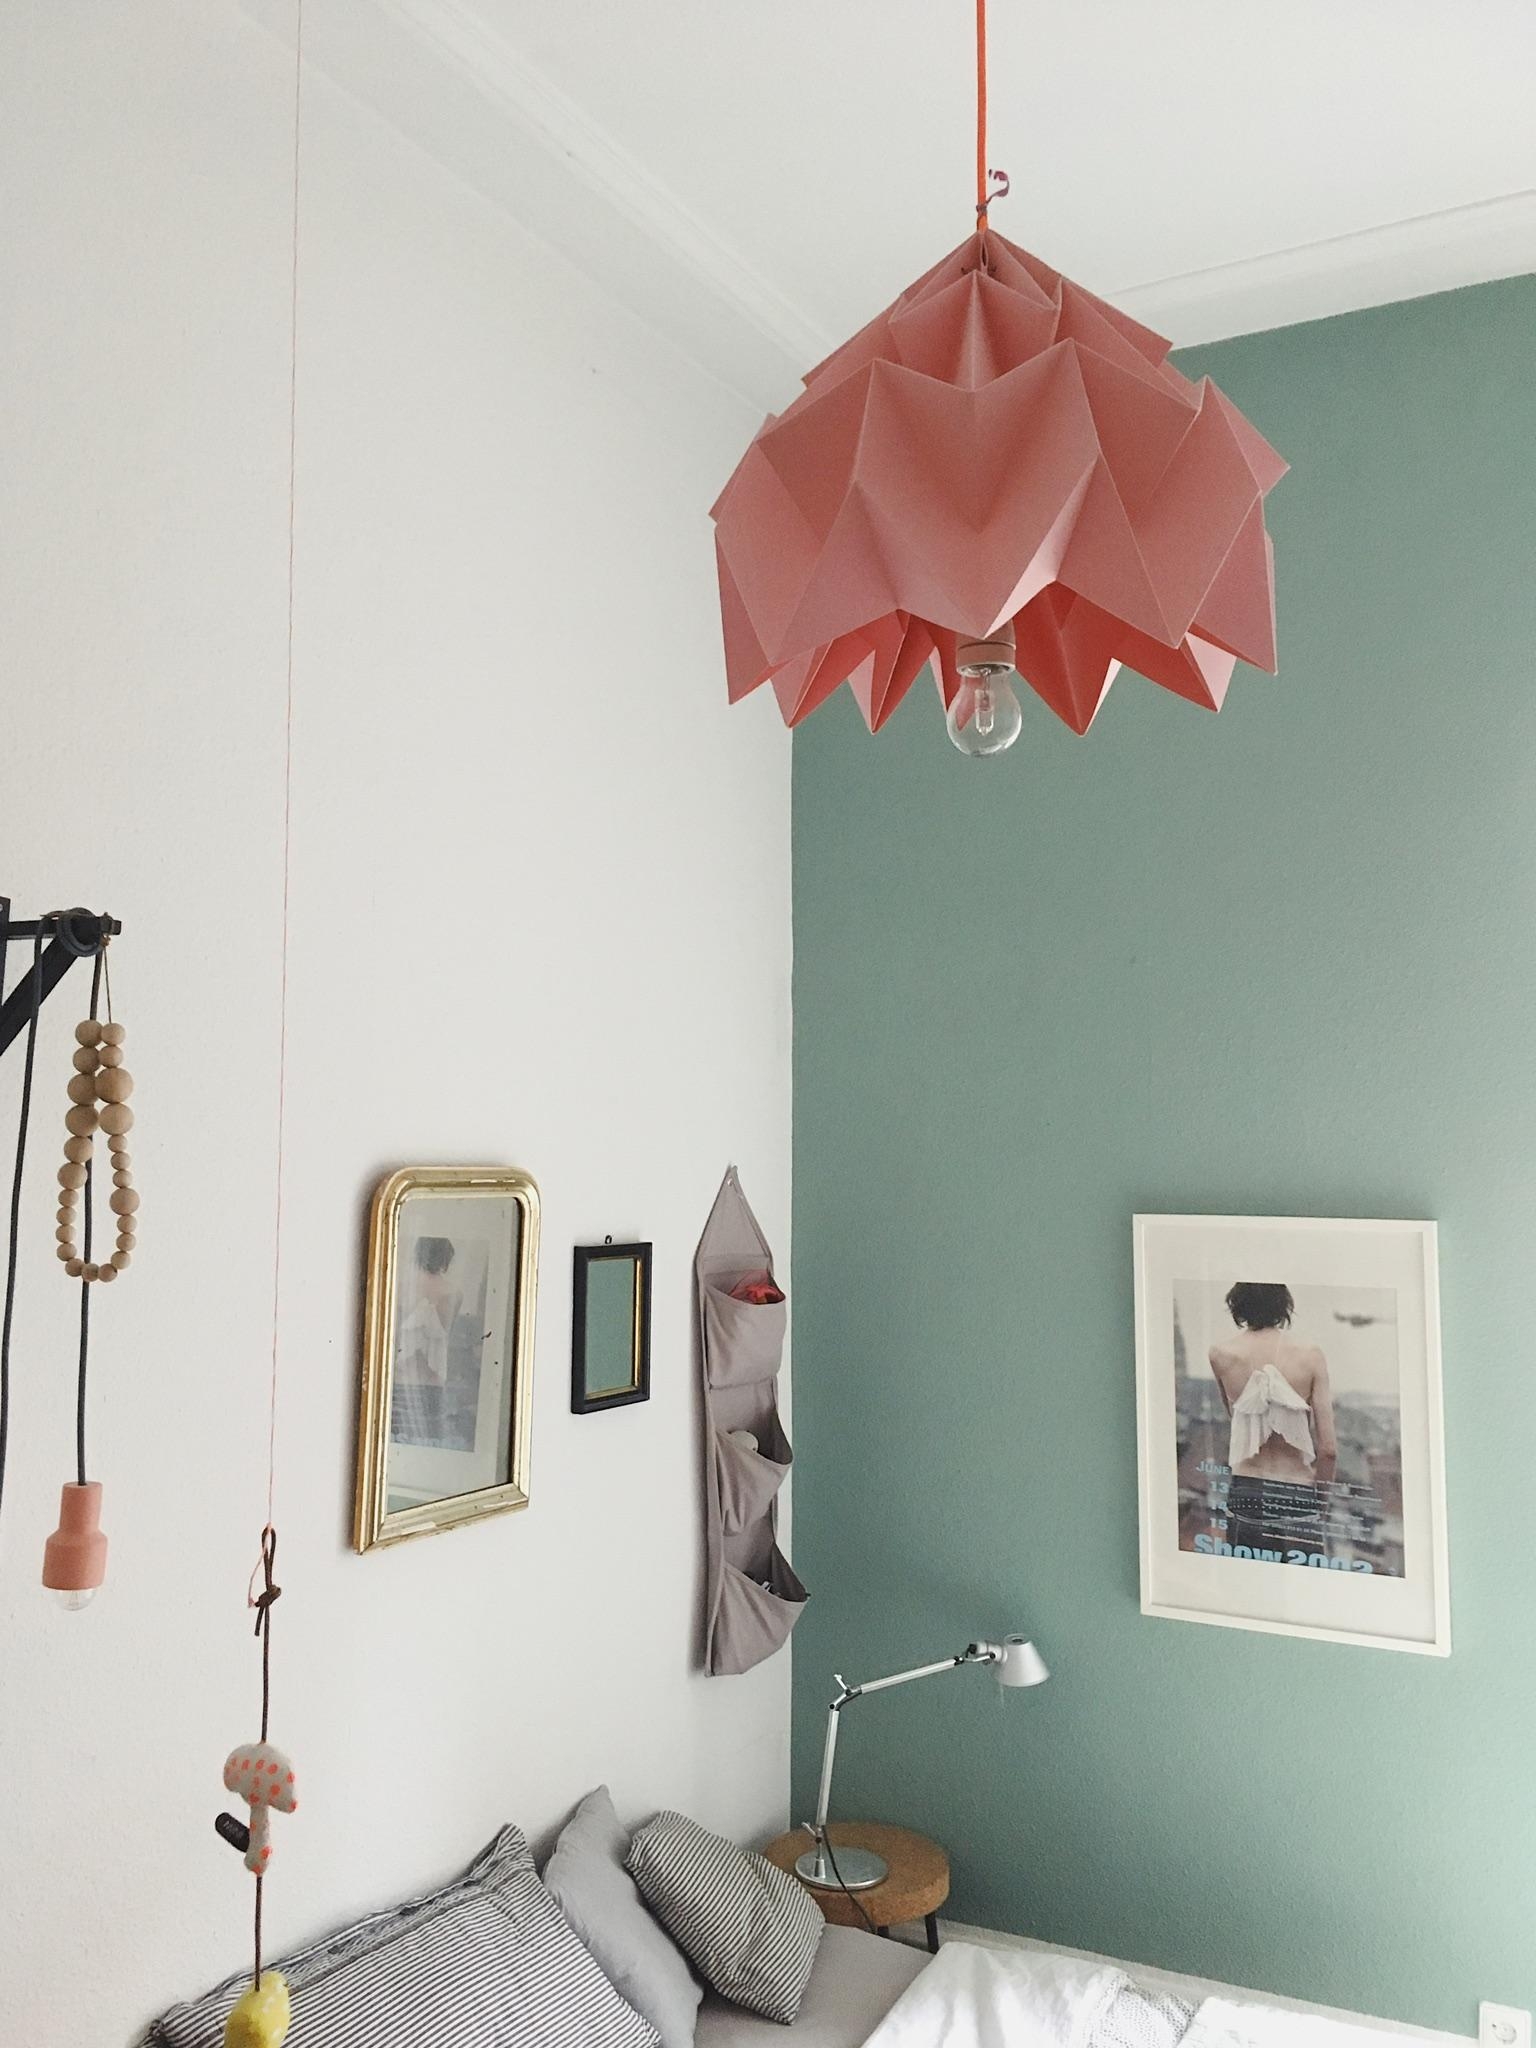 Schlafzimmer
#bedroom #home #nordicstyle #scandiliving #home #interior #interiordesign #cozycorner #decor #origami